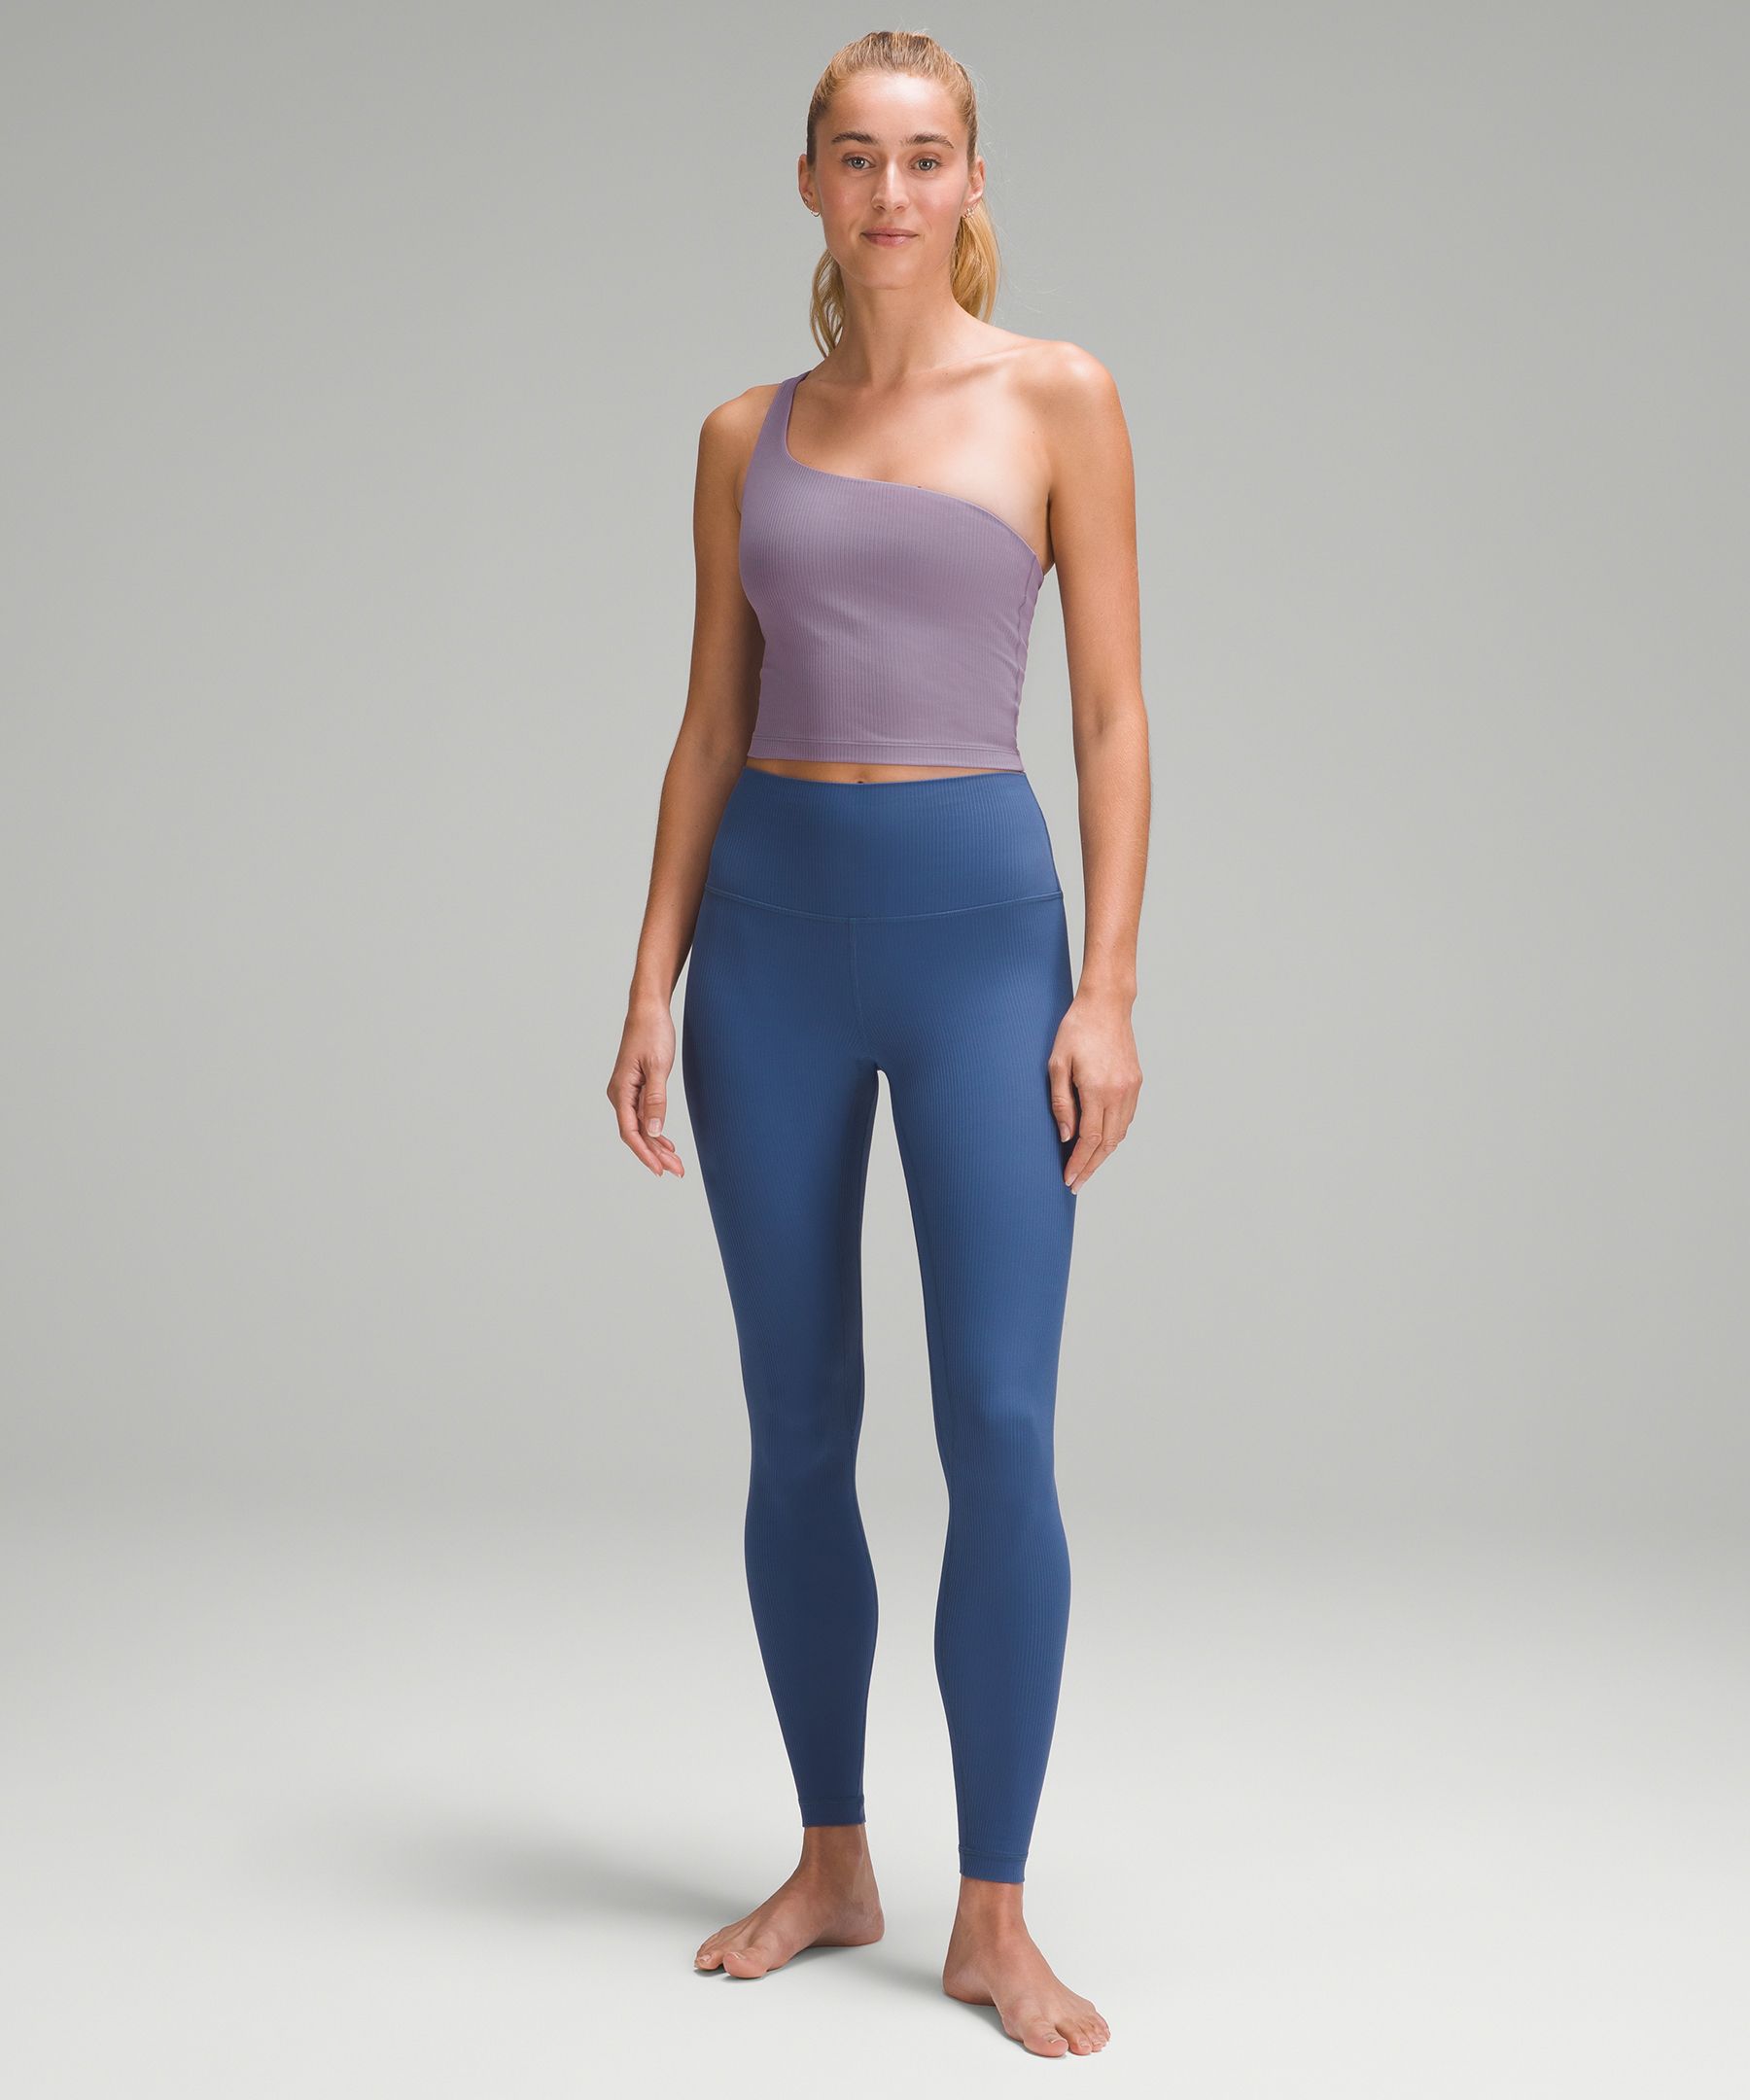 Ribbed Nulu Asymmetrical Yoga Tank Top, Women's Sleeveless & Tank Tops